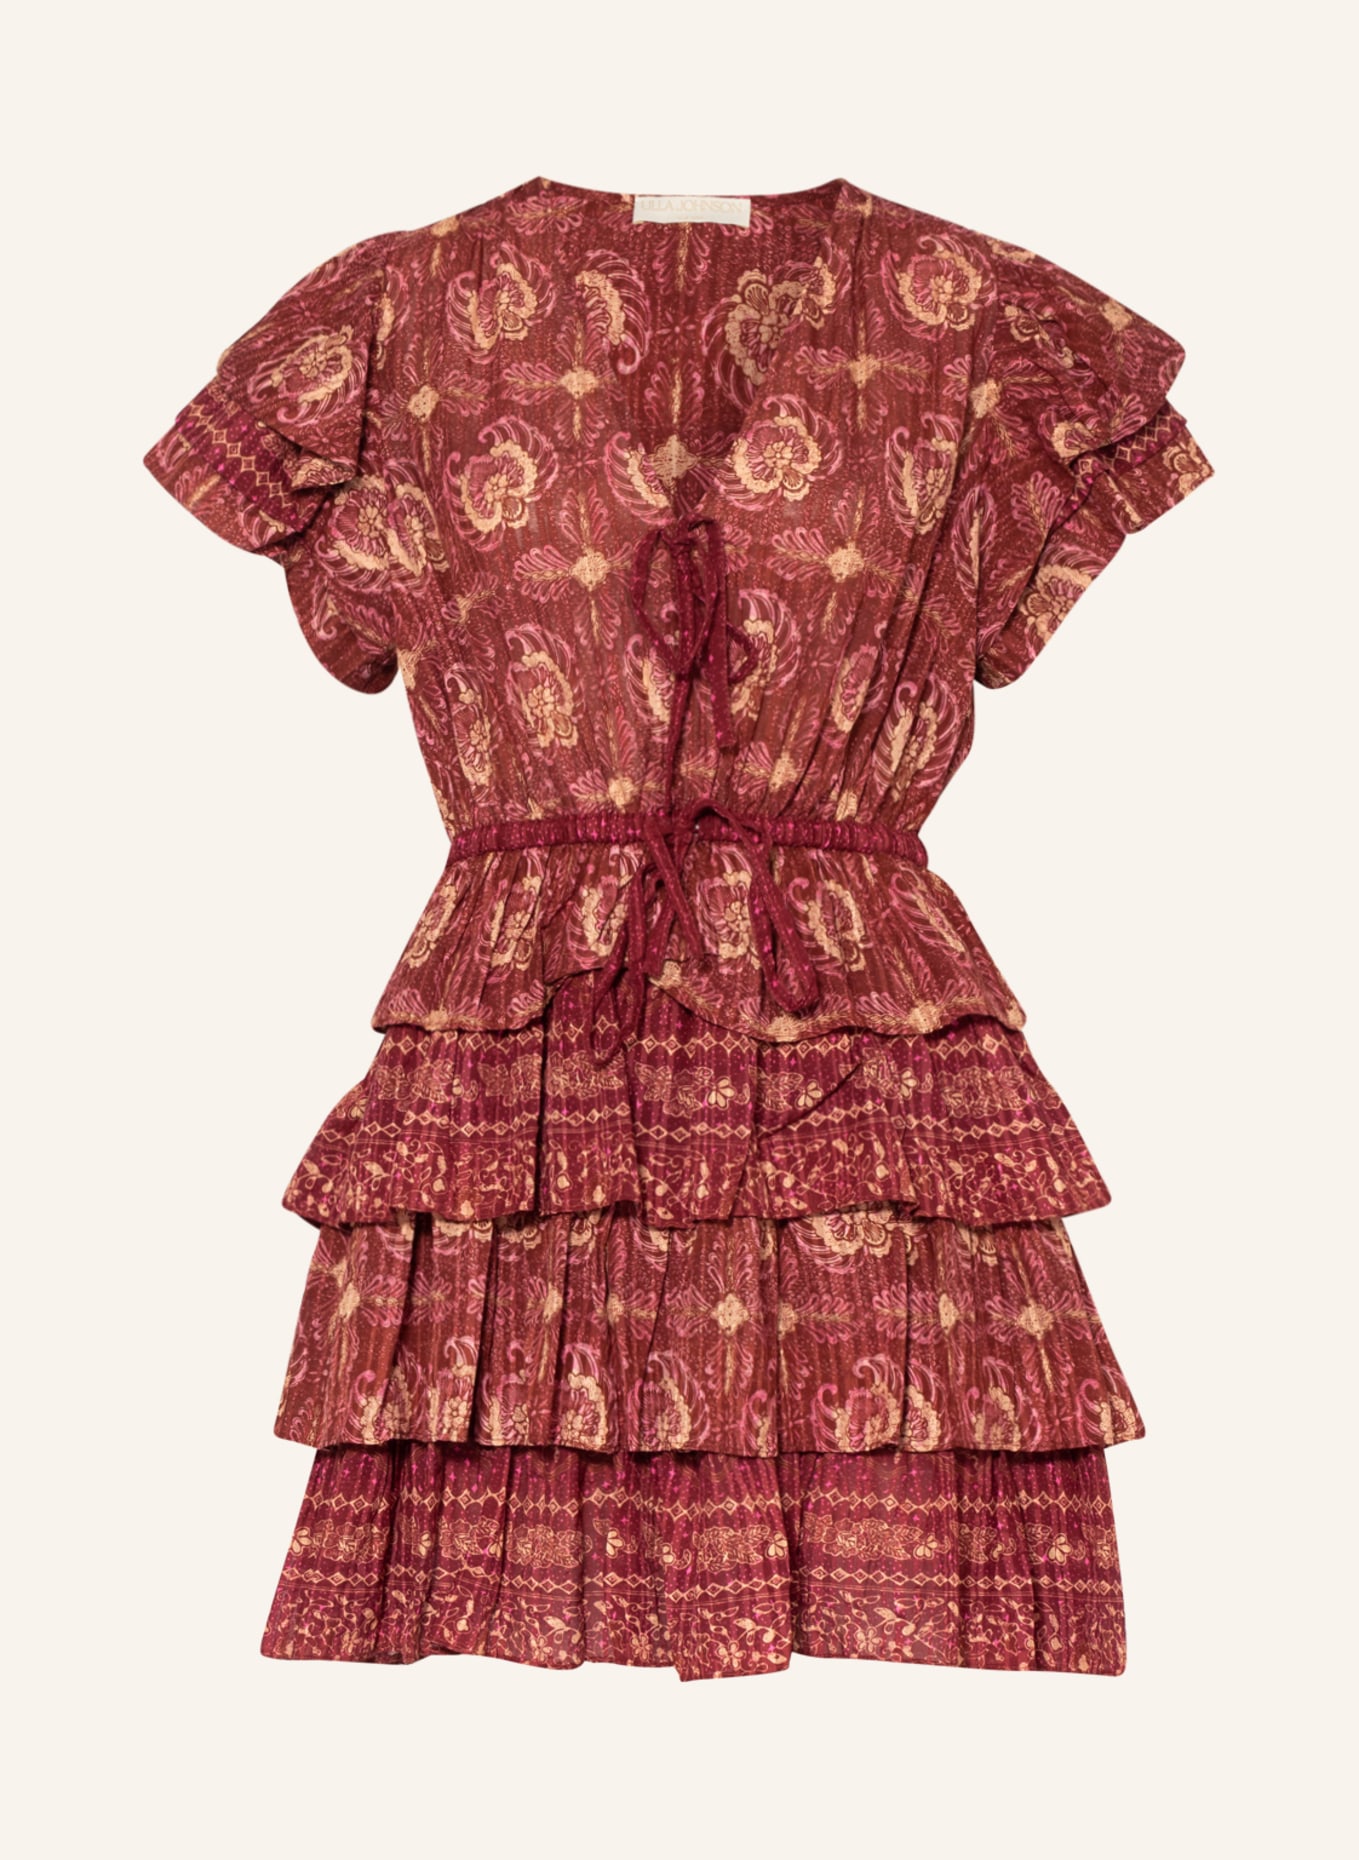 ULLA JOHNSON Kleid KAITLYN mit Rüschen, Farbe: DUNKELROT/ HELLORANGE/ ROSA (Bild 1)